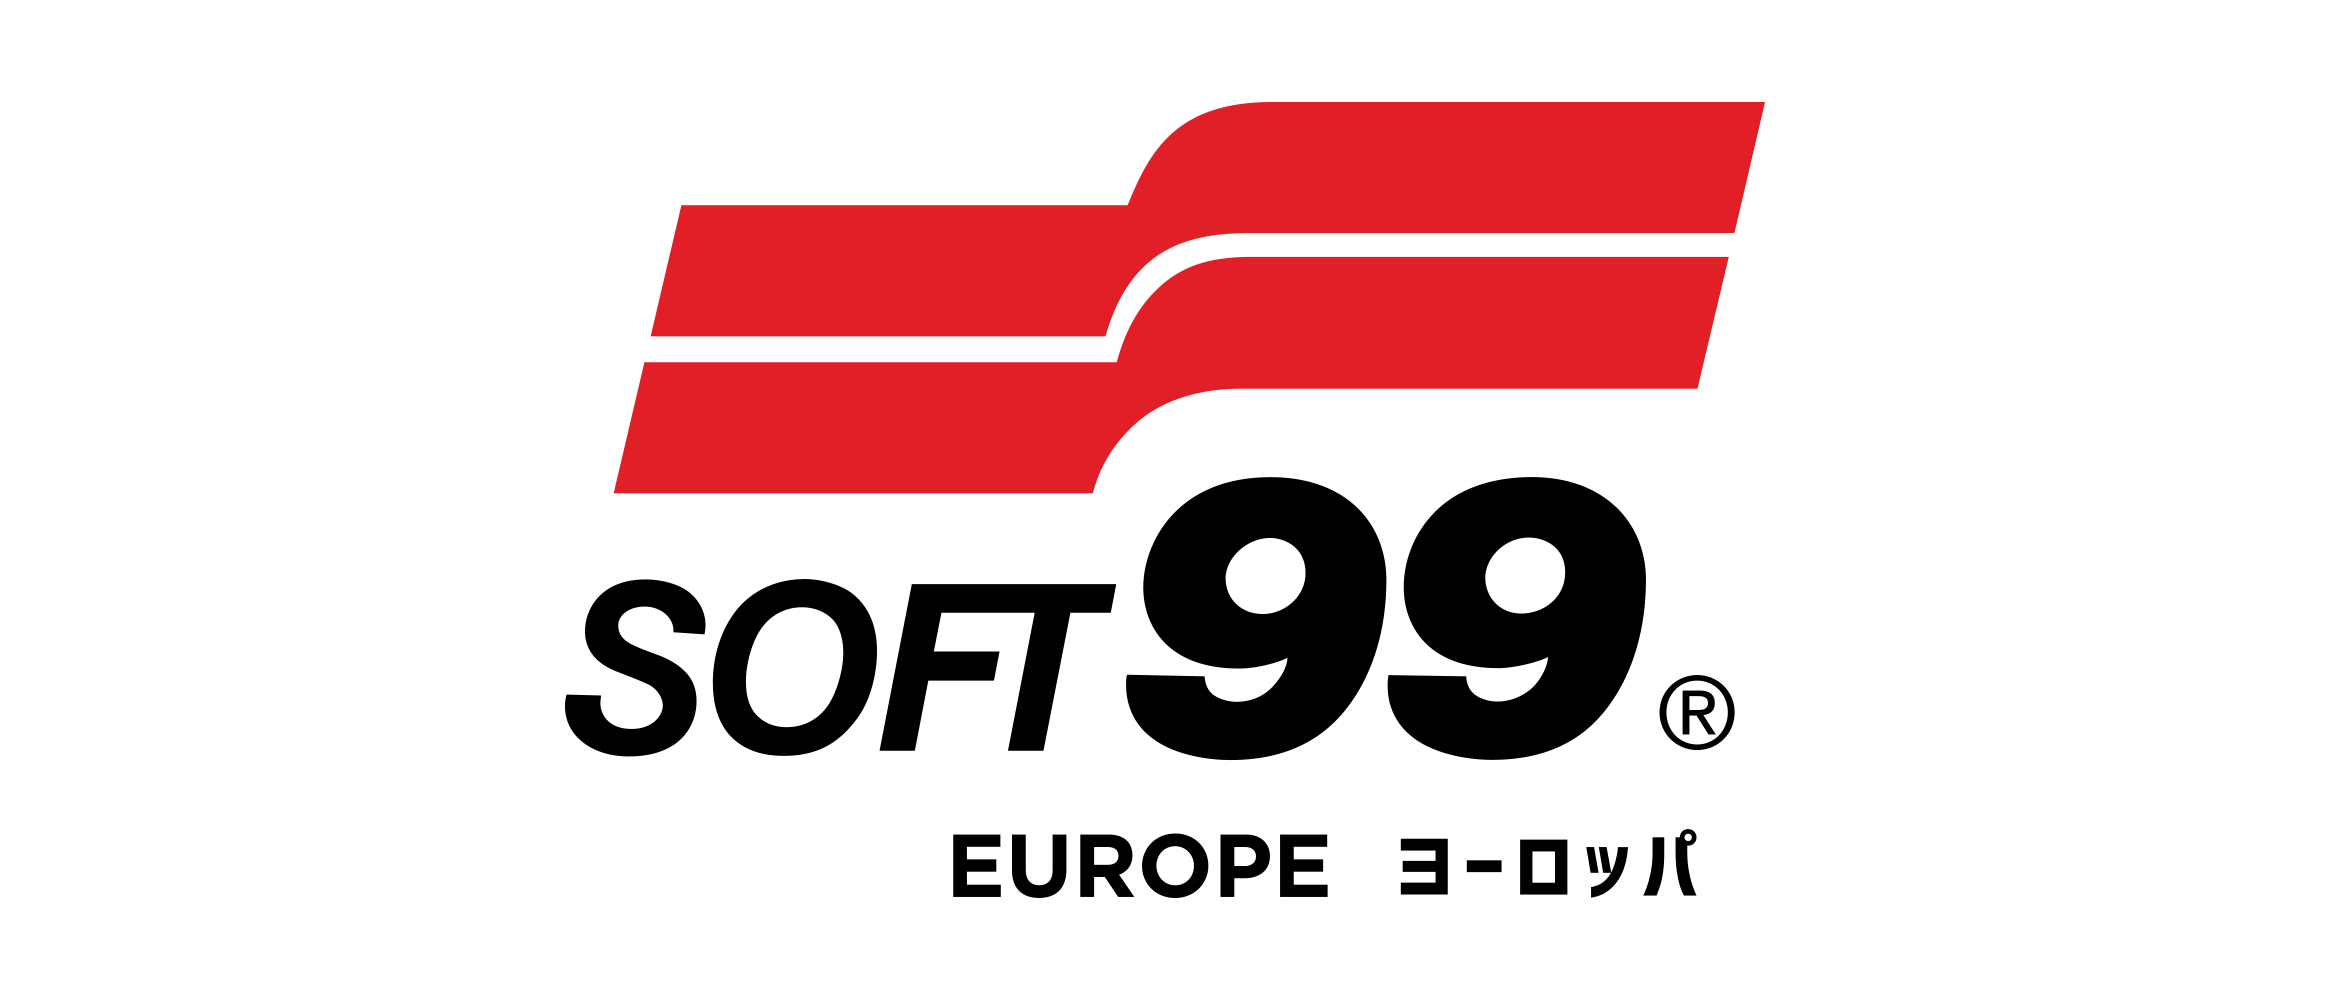 Soft 99 Store